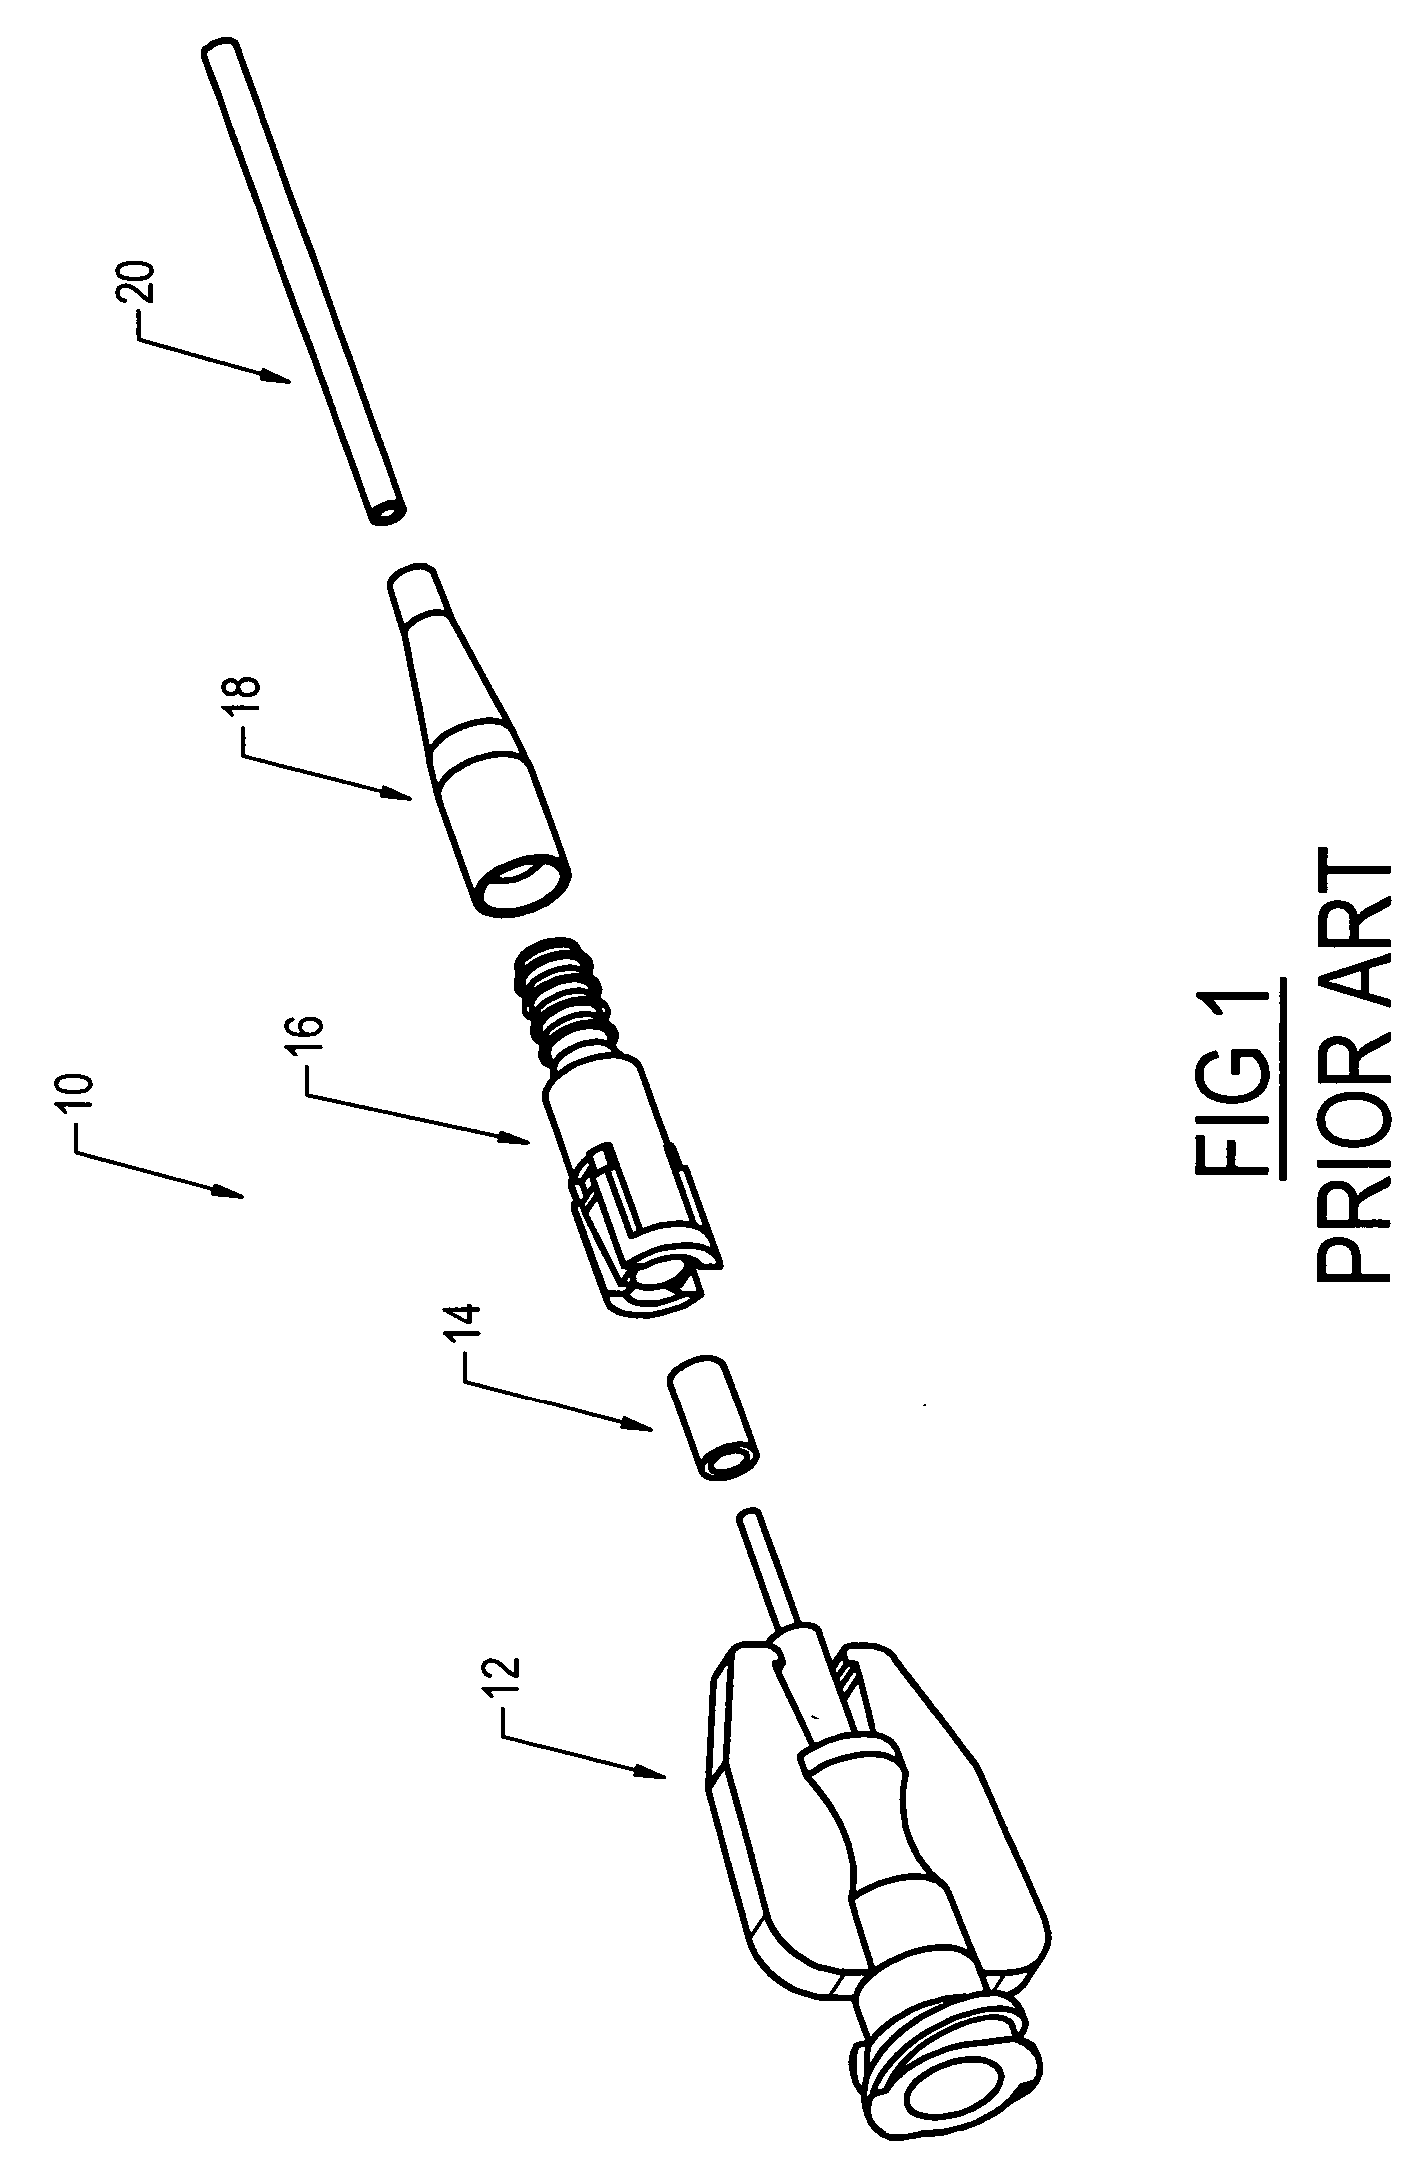 Catheter connector